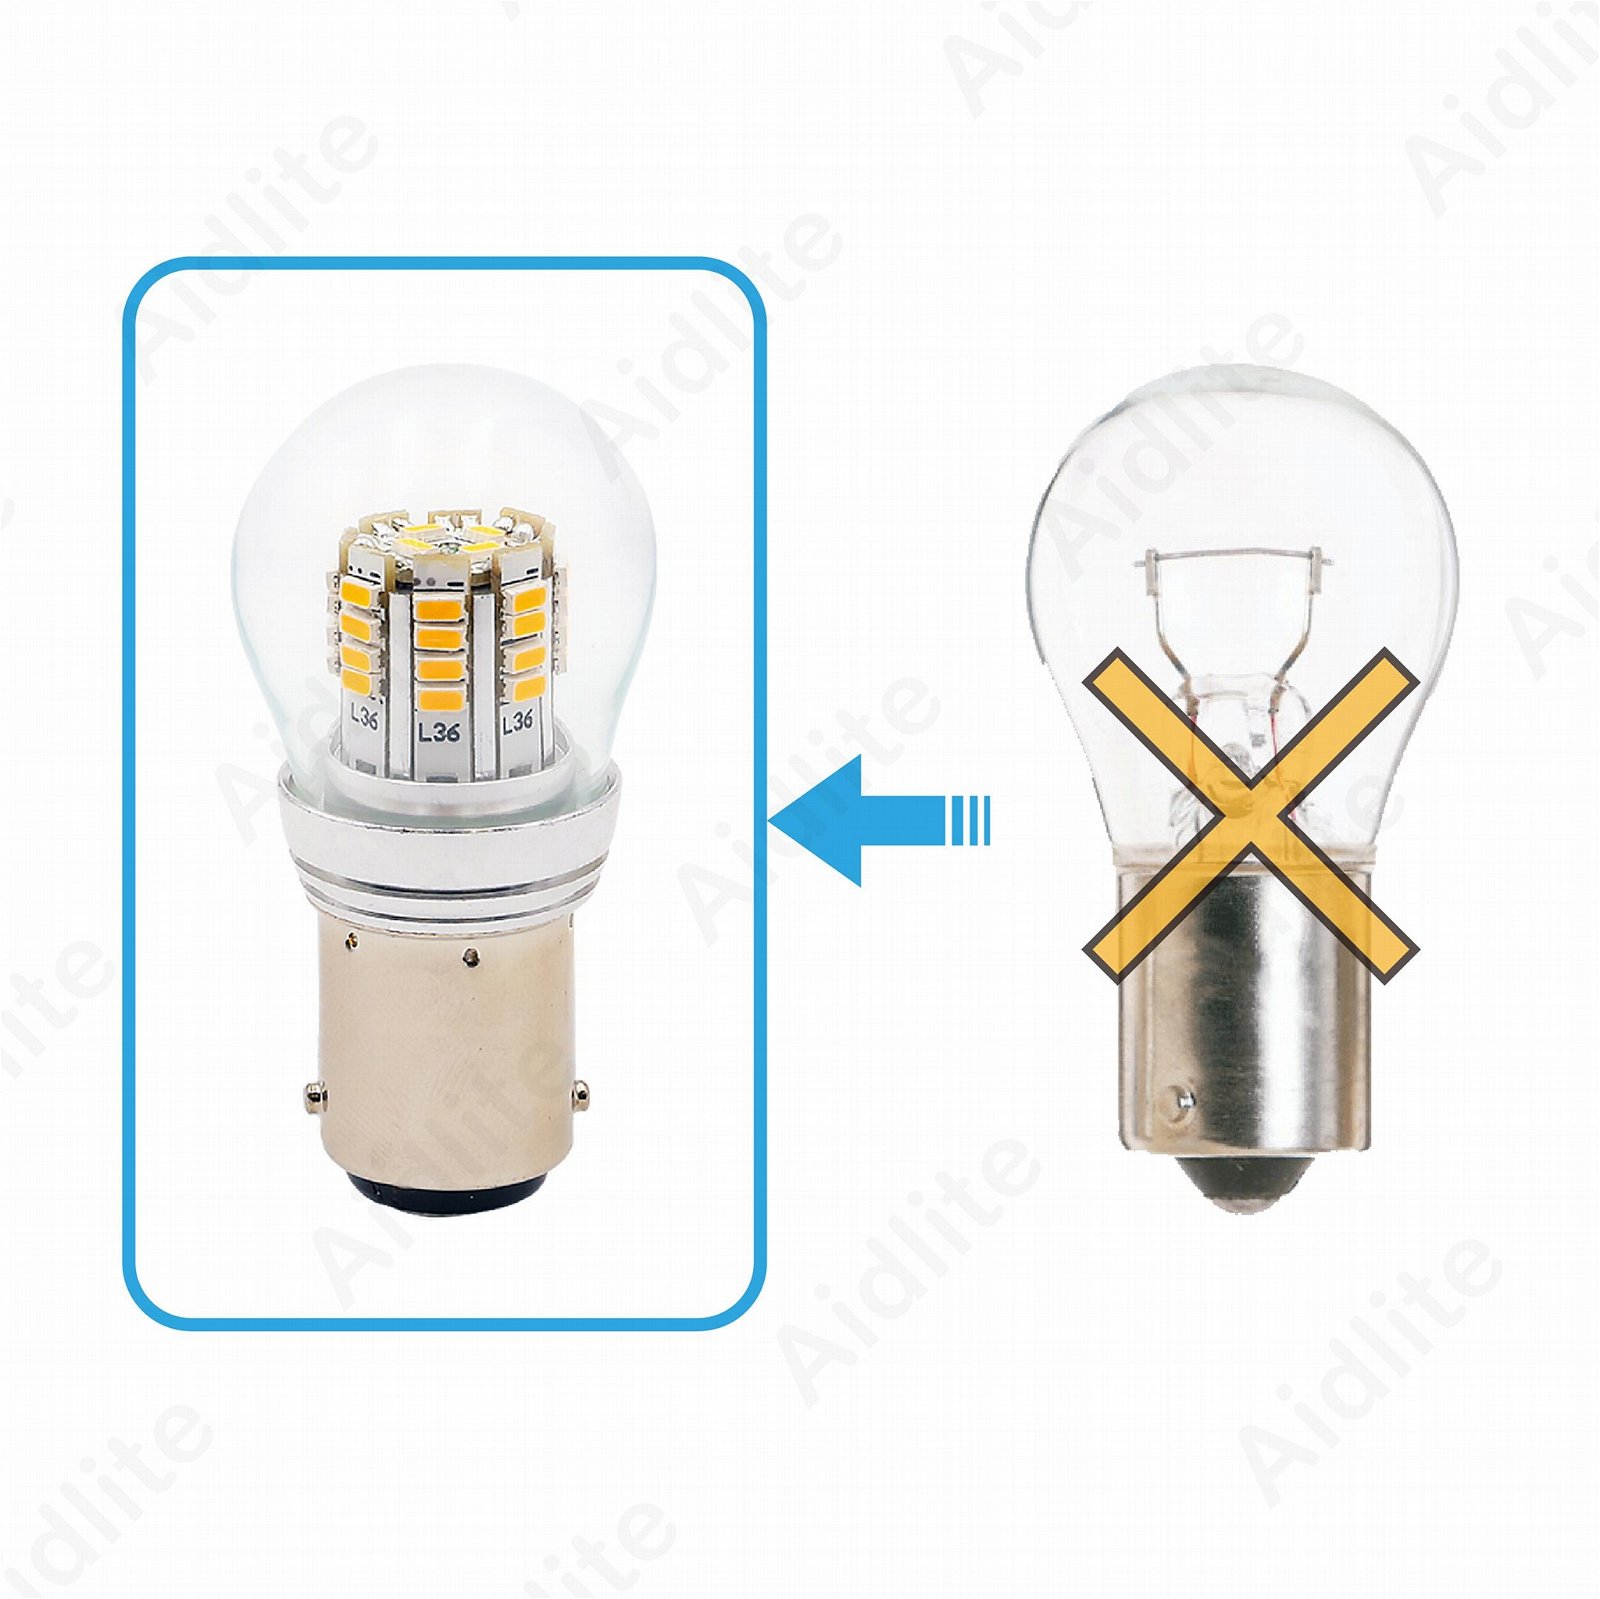 1156 LED Bulb w/ Stock Cover - 36 LED Tower - BA15S Turn Signal 5